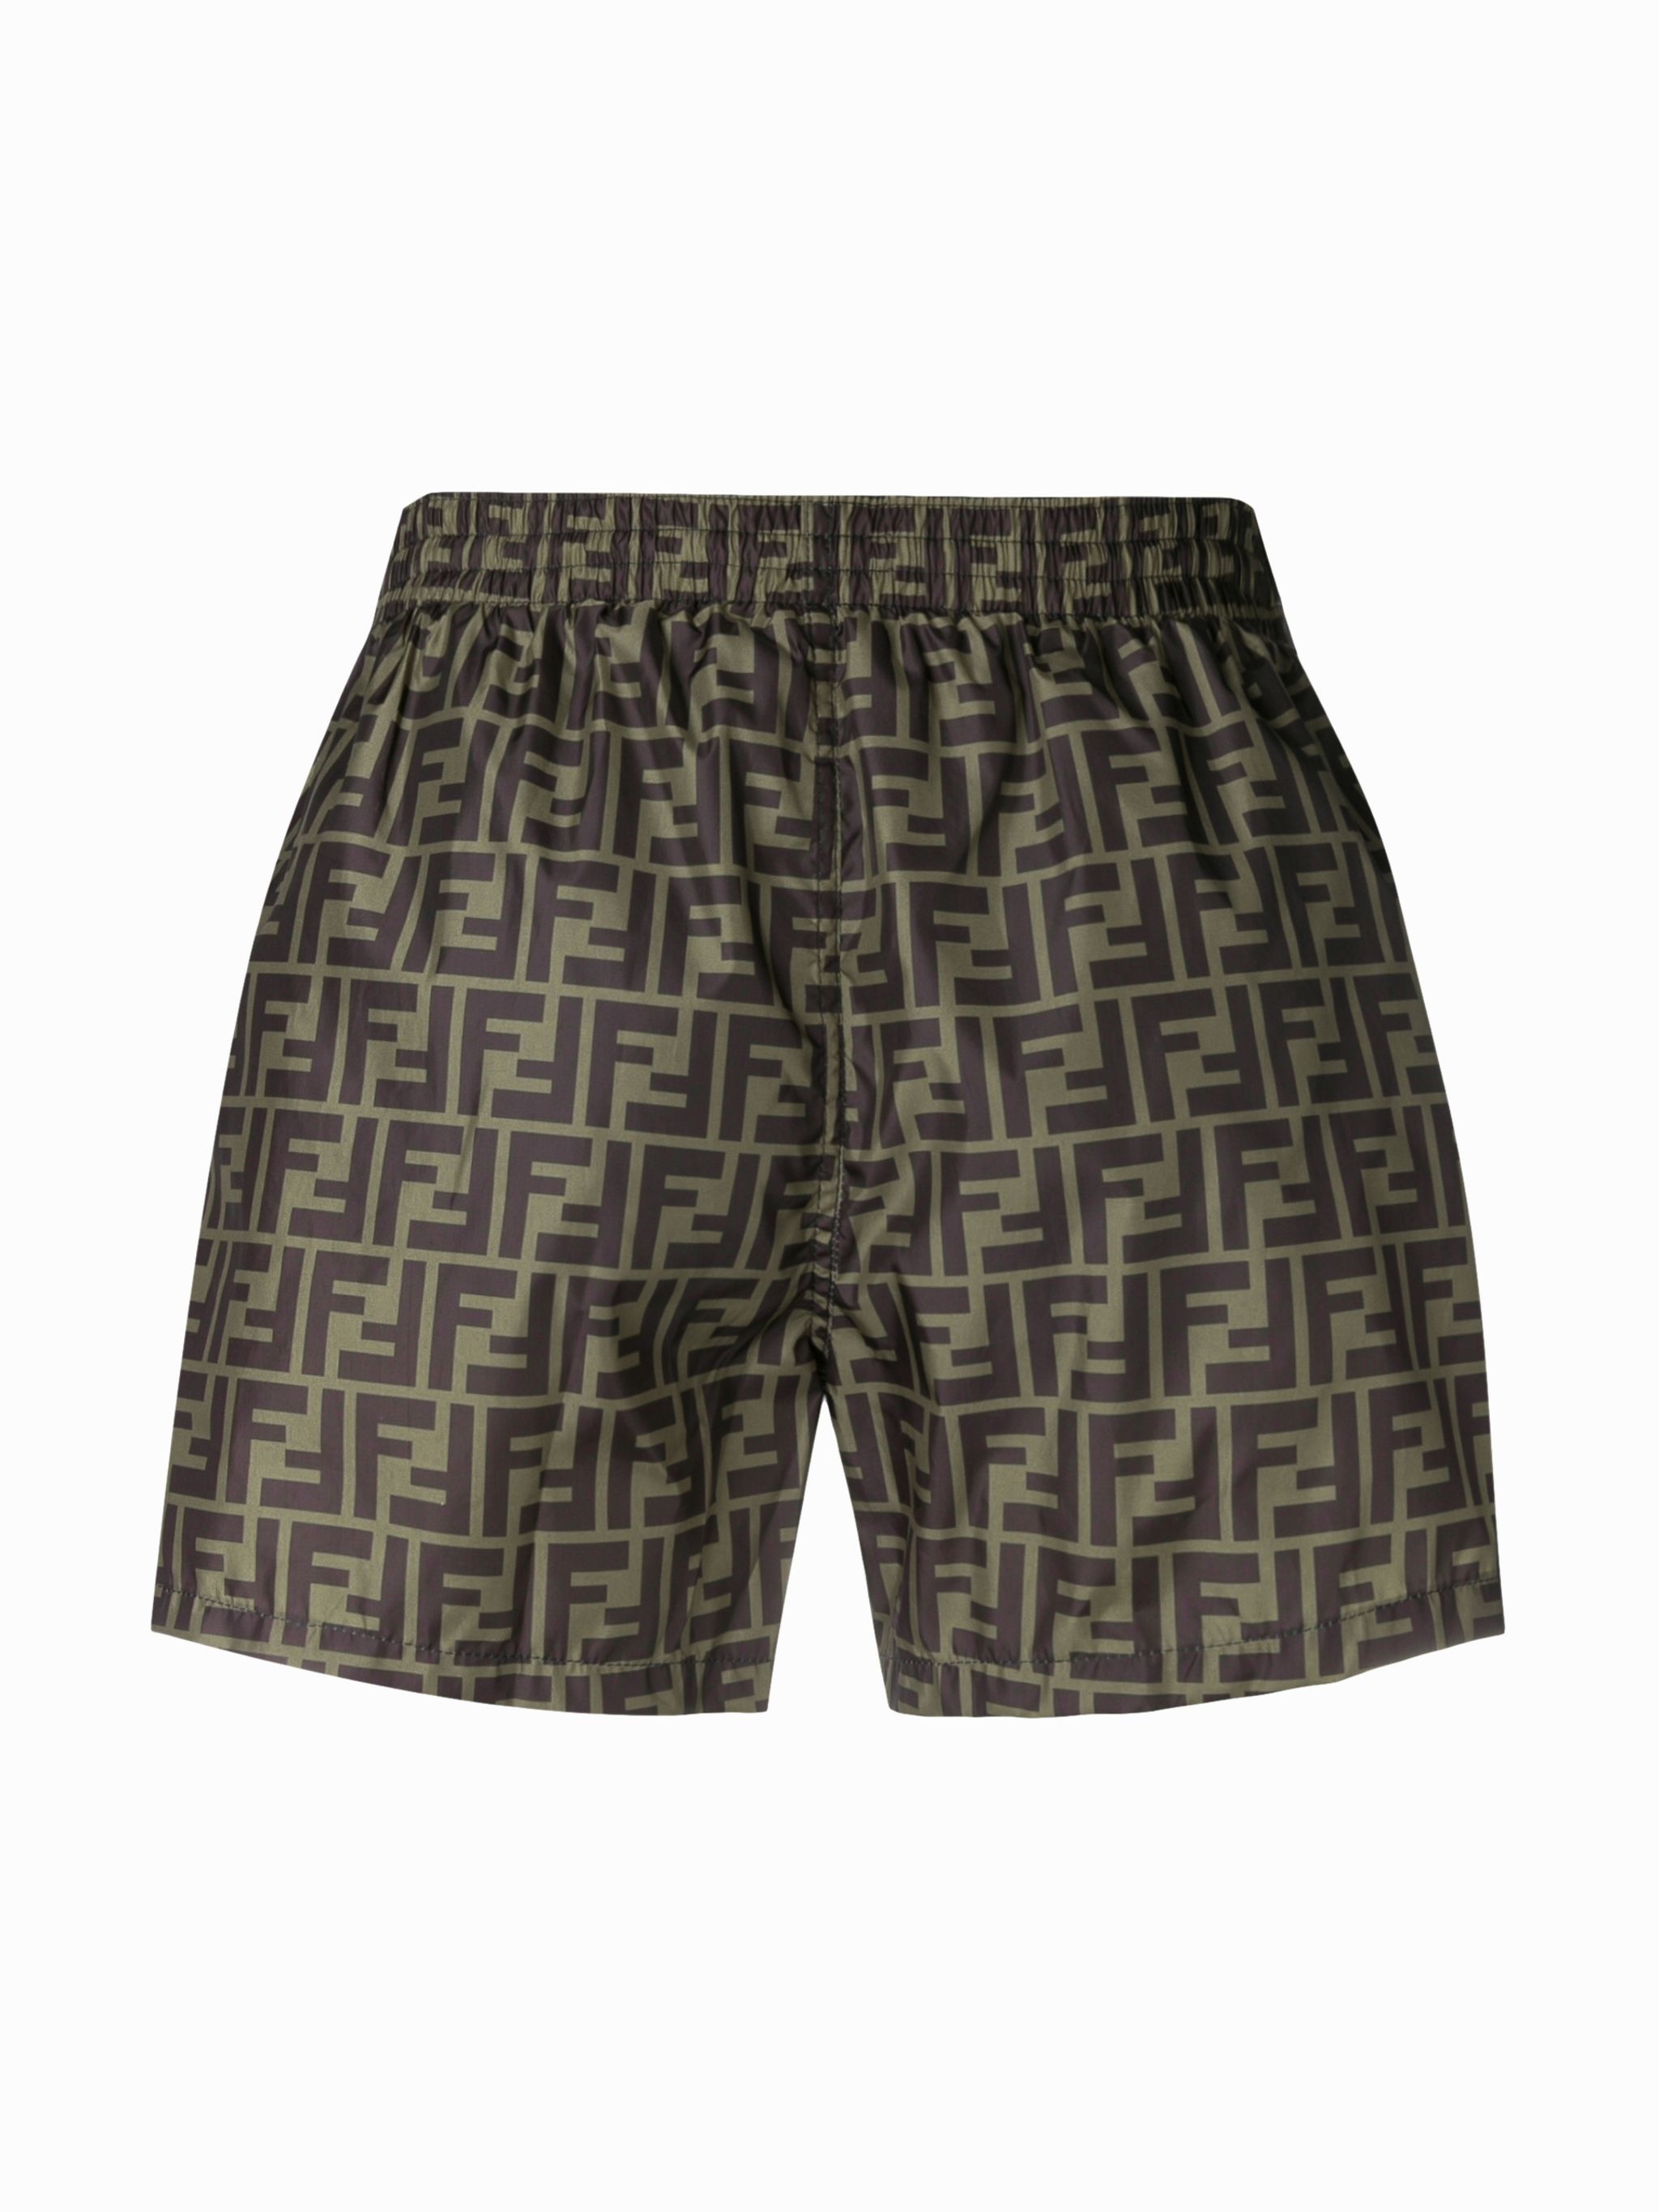 FF motif swim shorts - 4